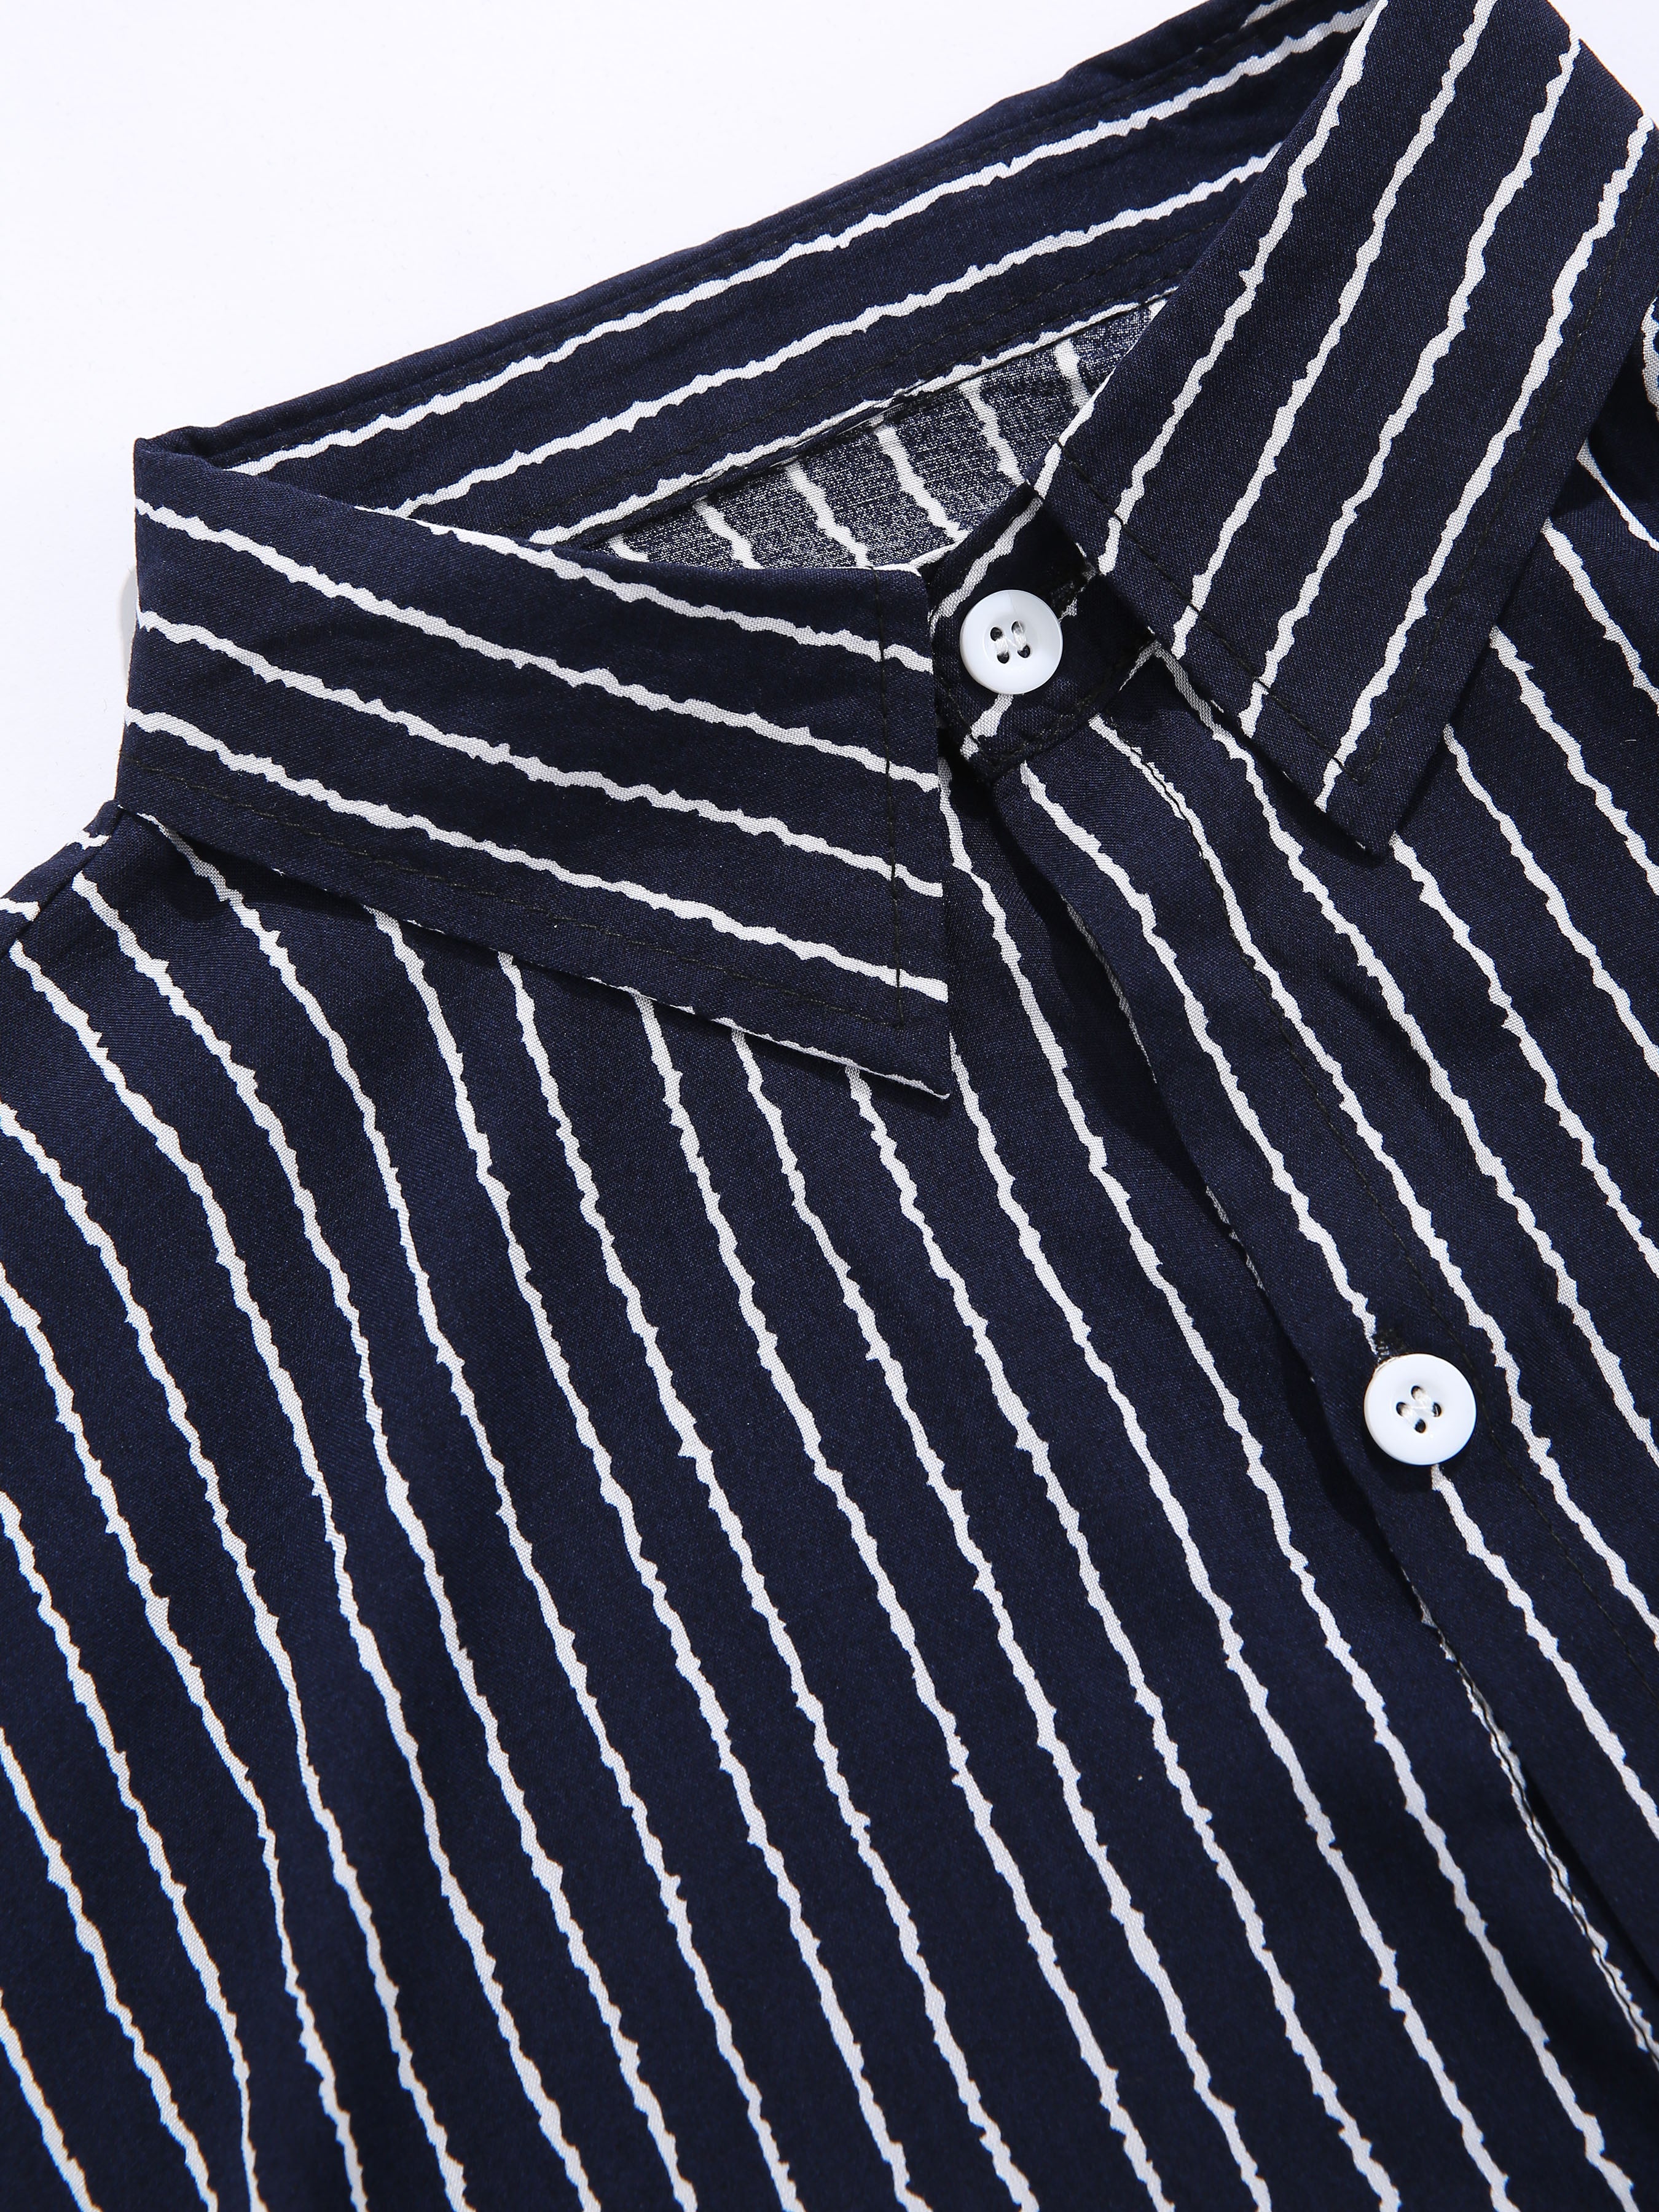 Vintage Stripes Cotton Shirts